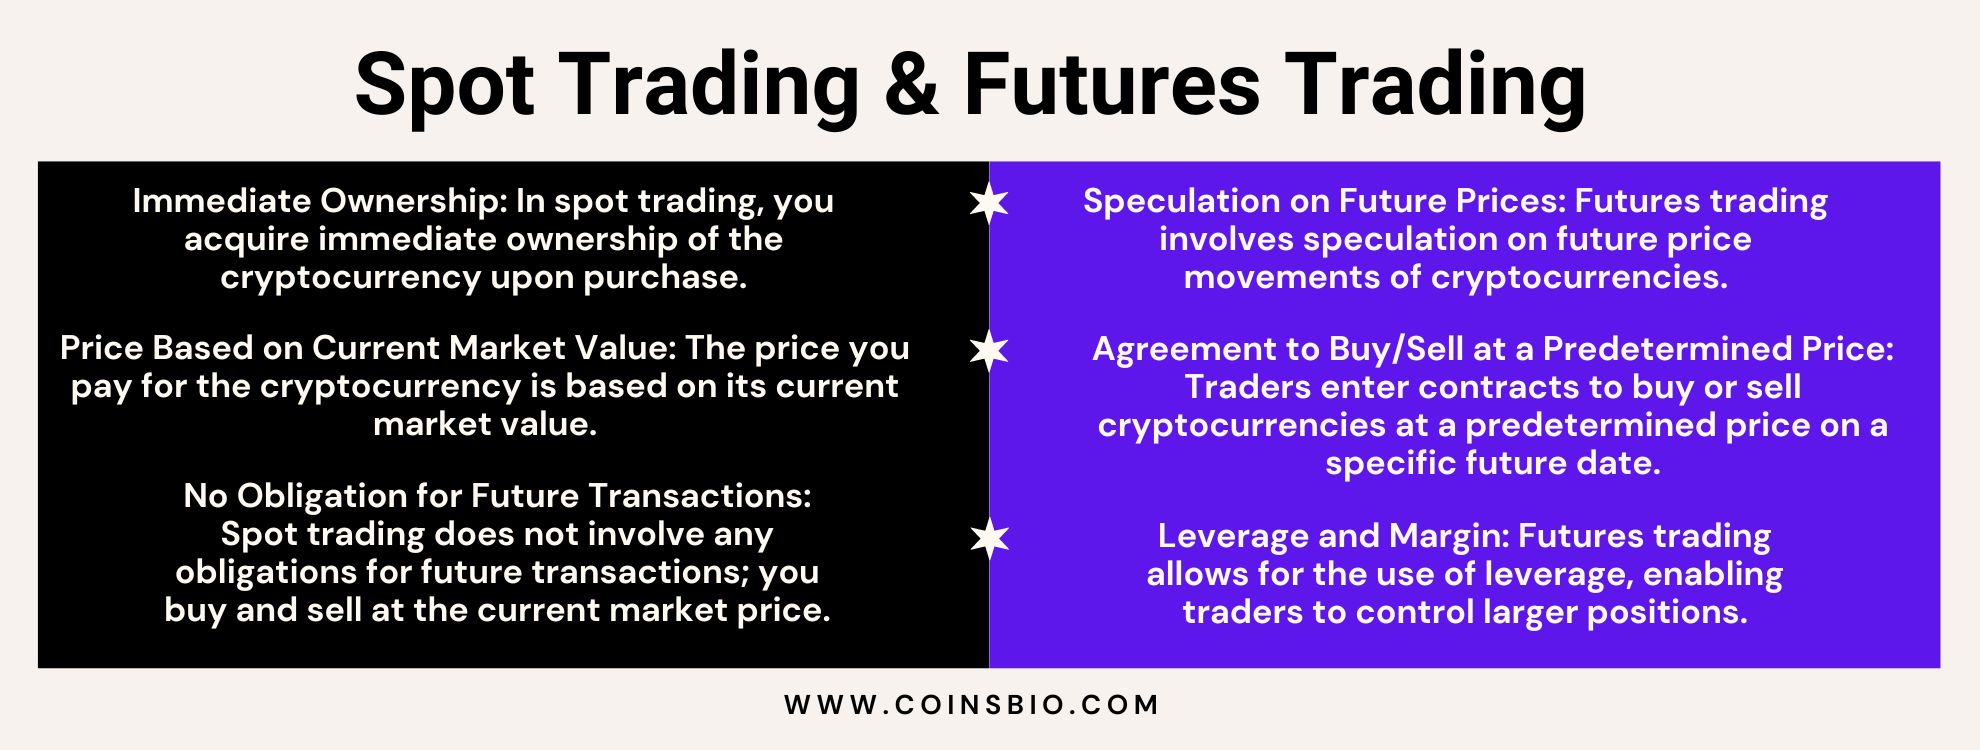 Spot-Trading-vs-Futures-Trading Image